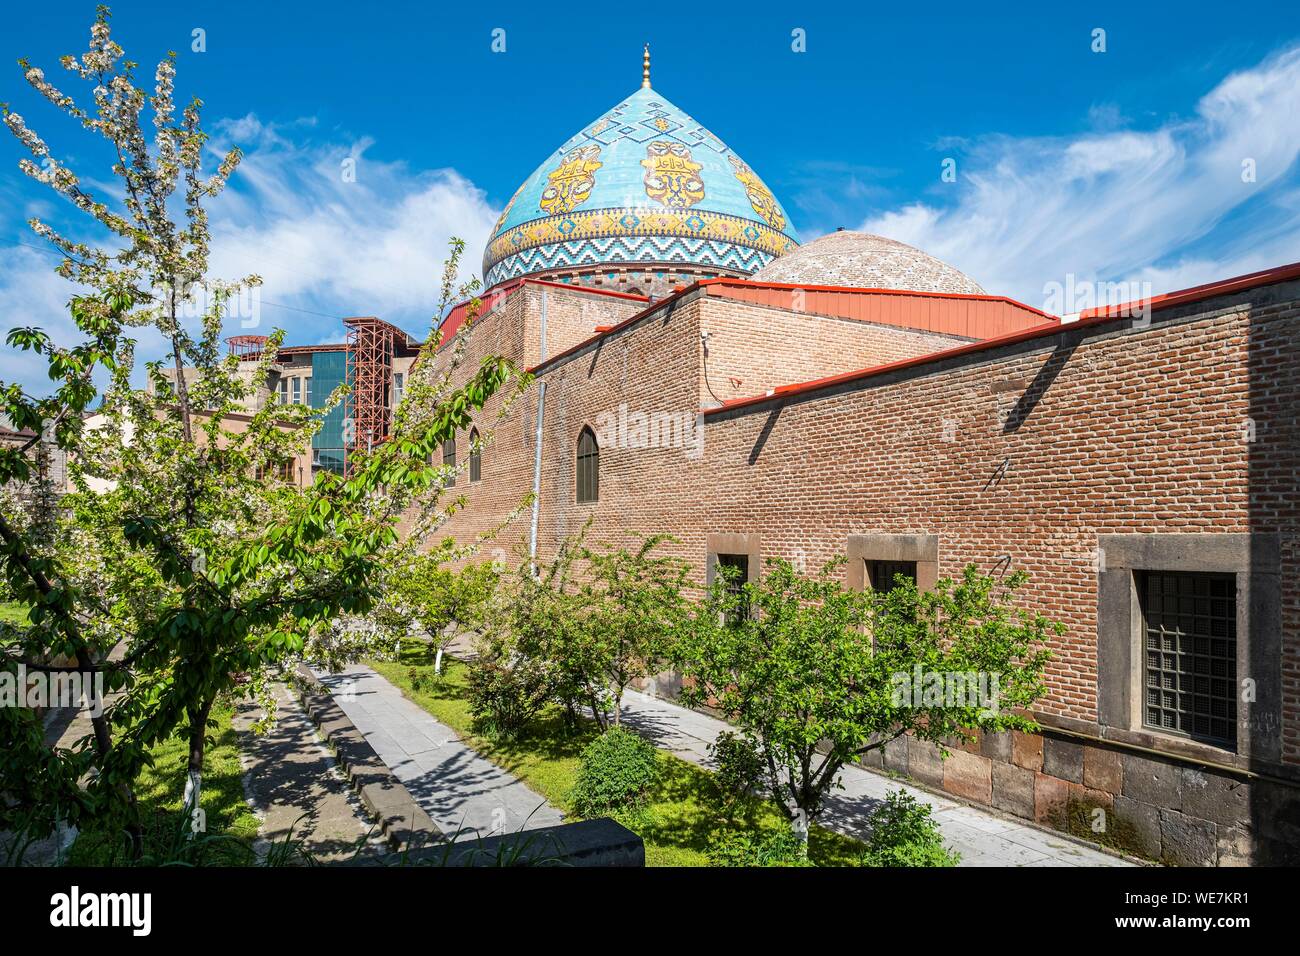 Armenia, Yerevan, the Blue mosque built in 1766 Stock Photo